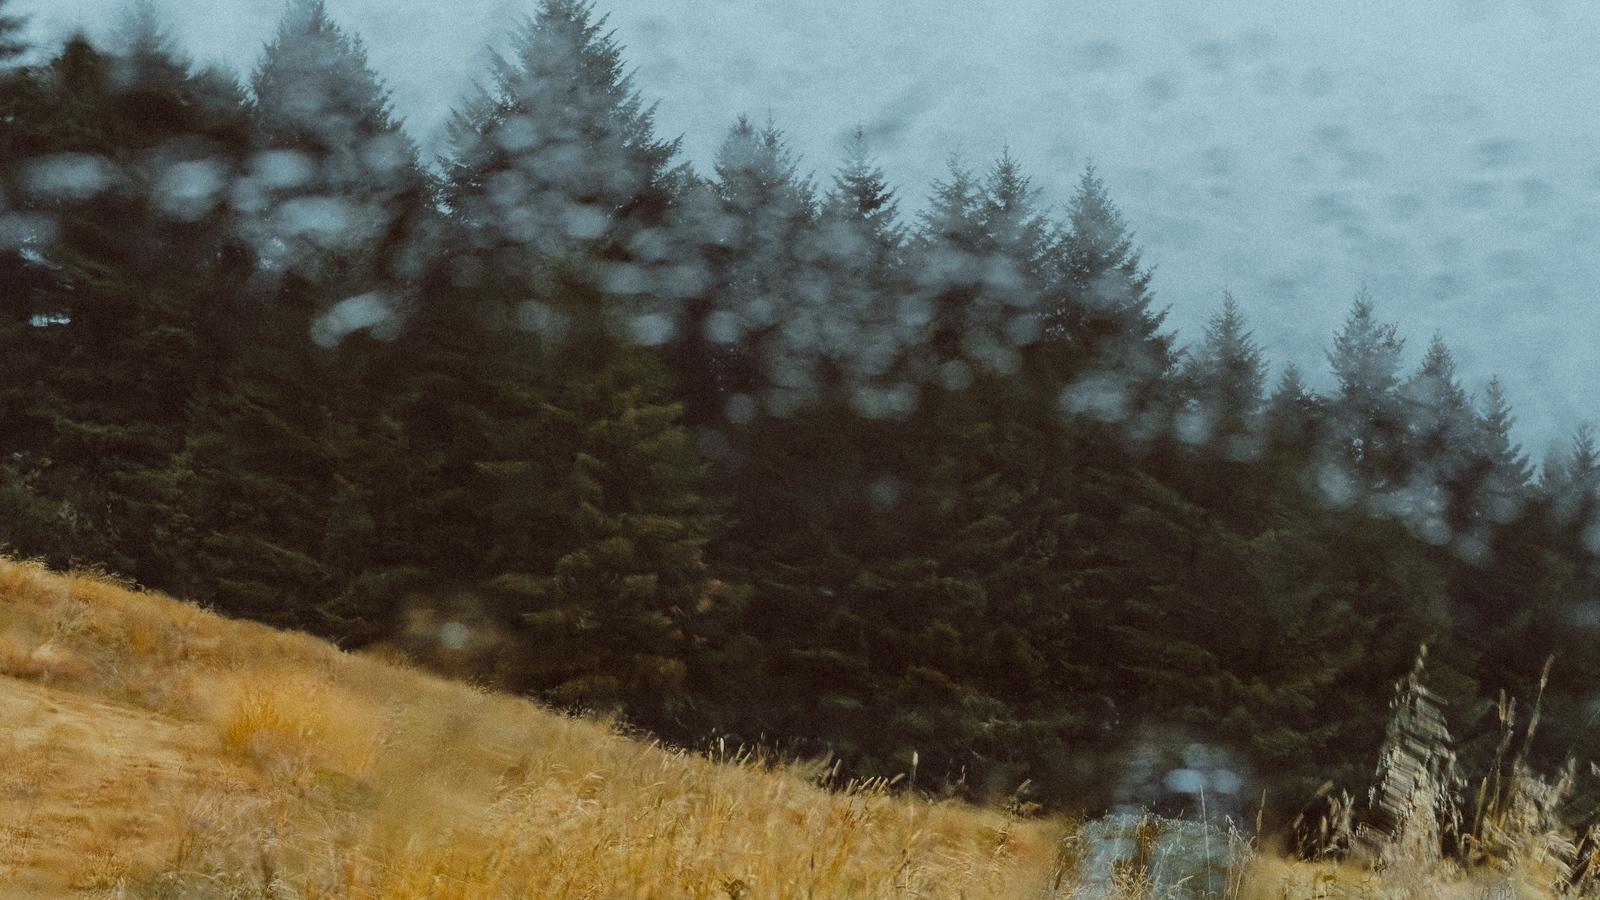 Download wallpaper 1600x900 car, forest, view, glass, rain